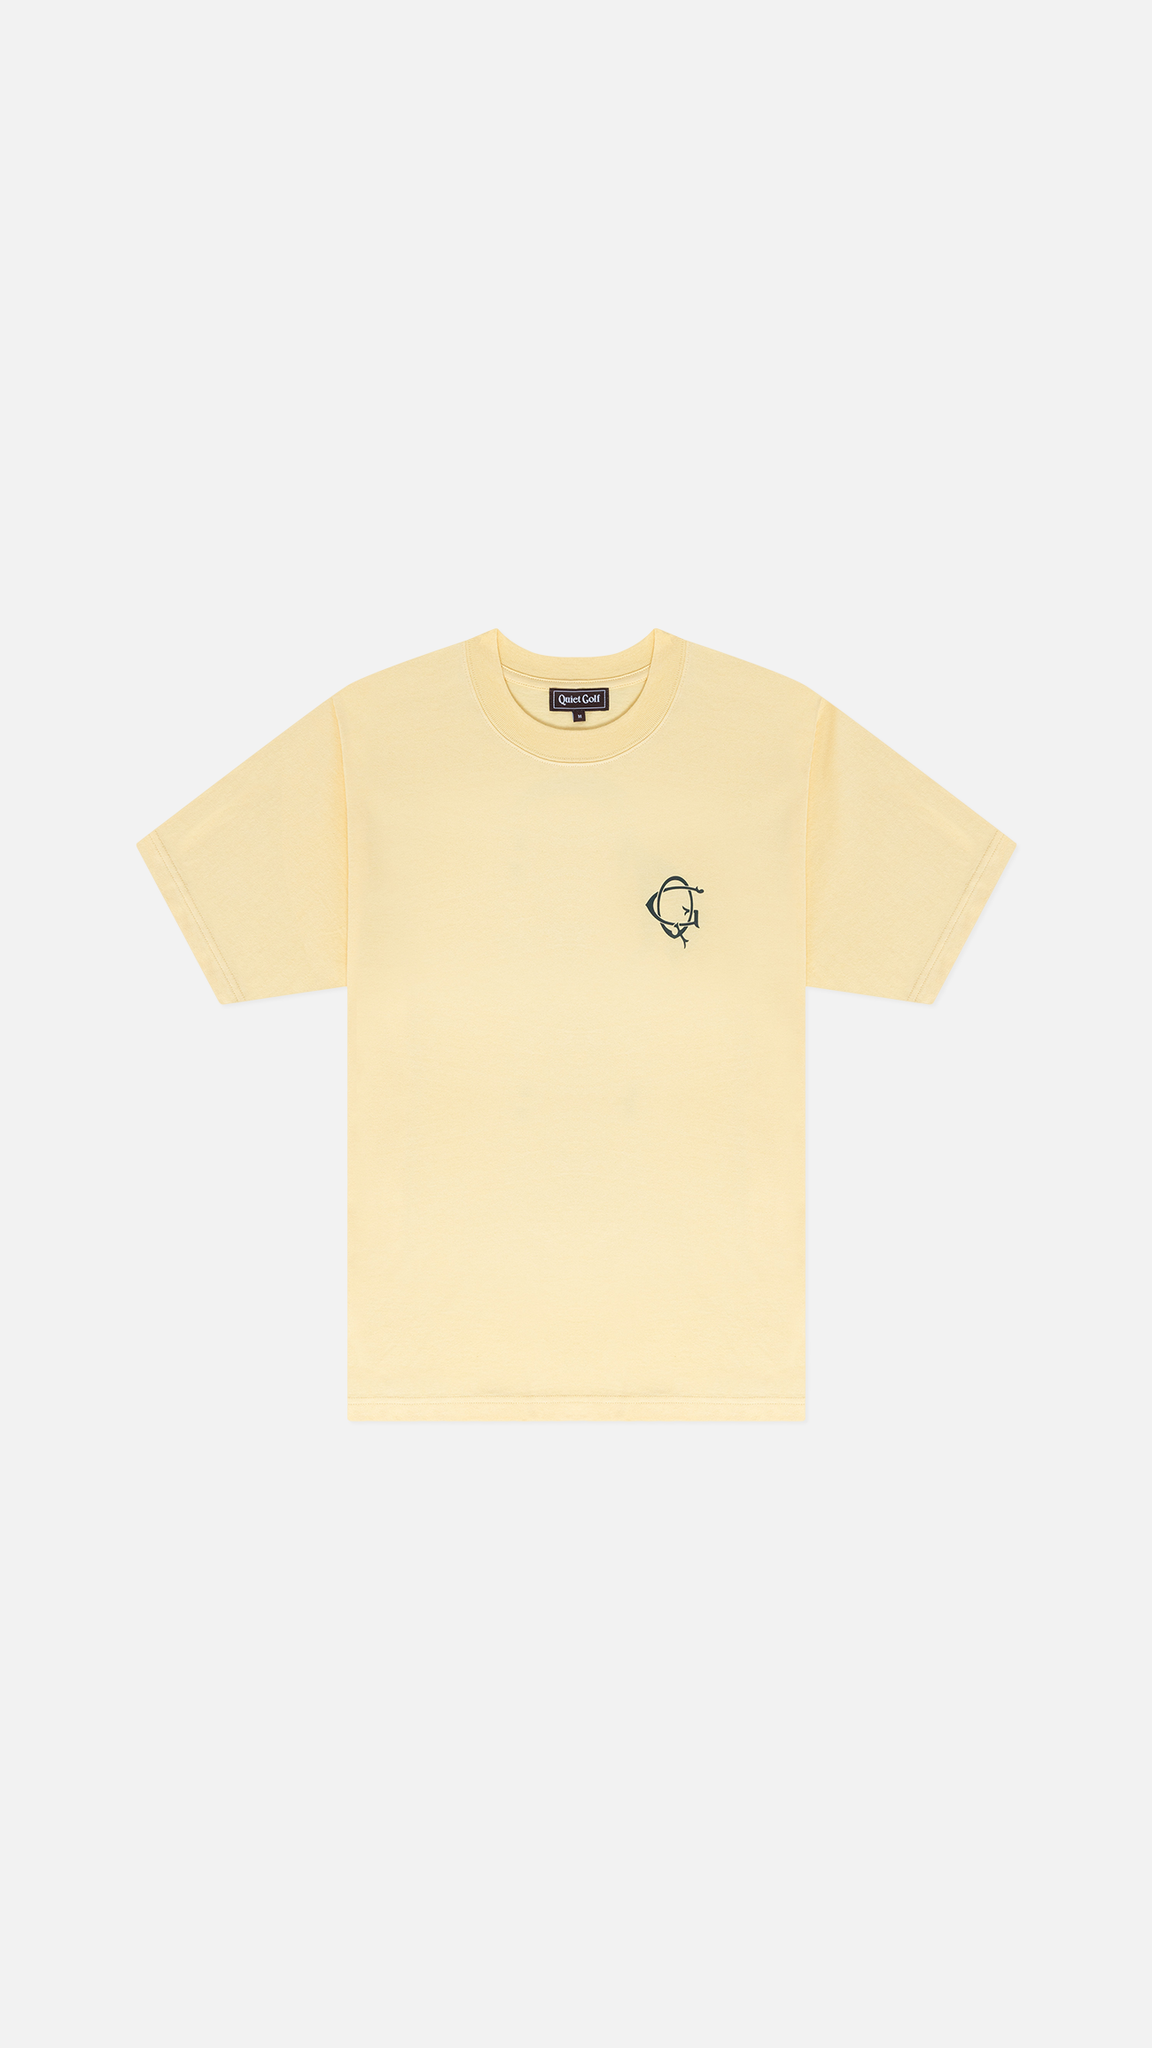 QG Crest T-Shirt Canary